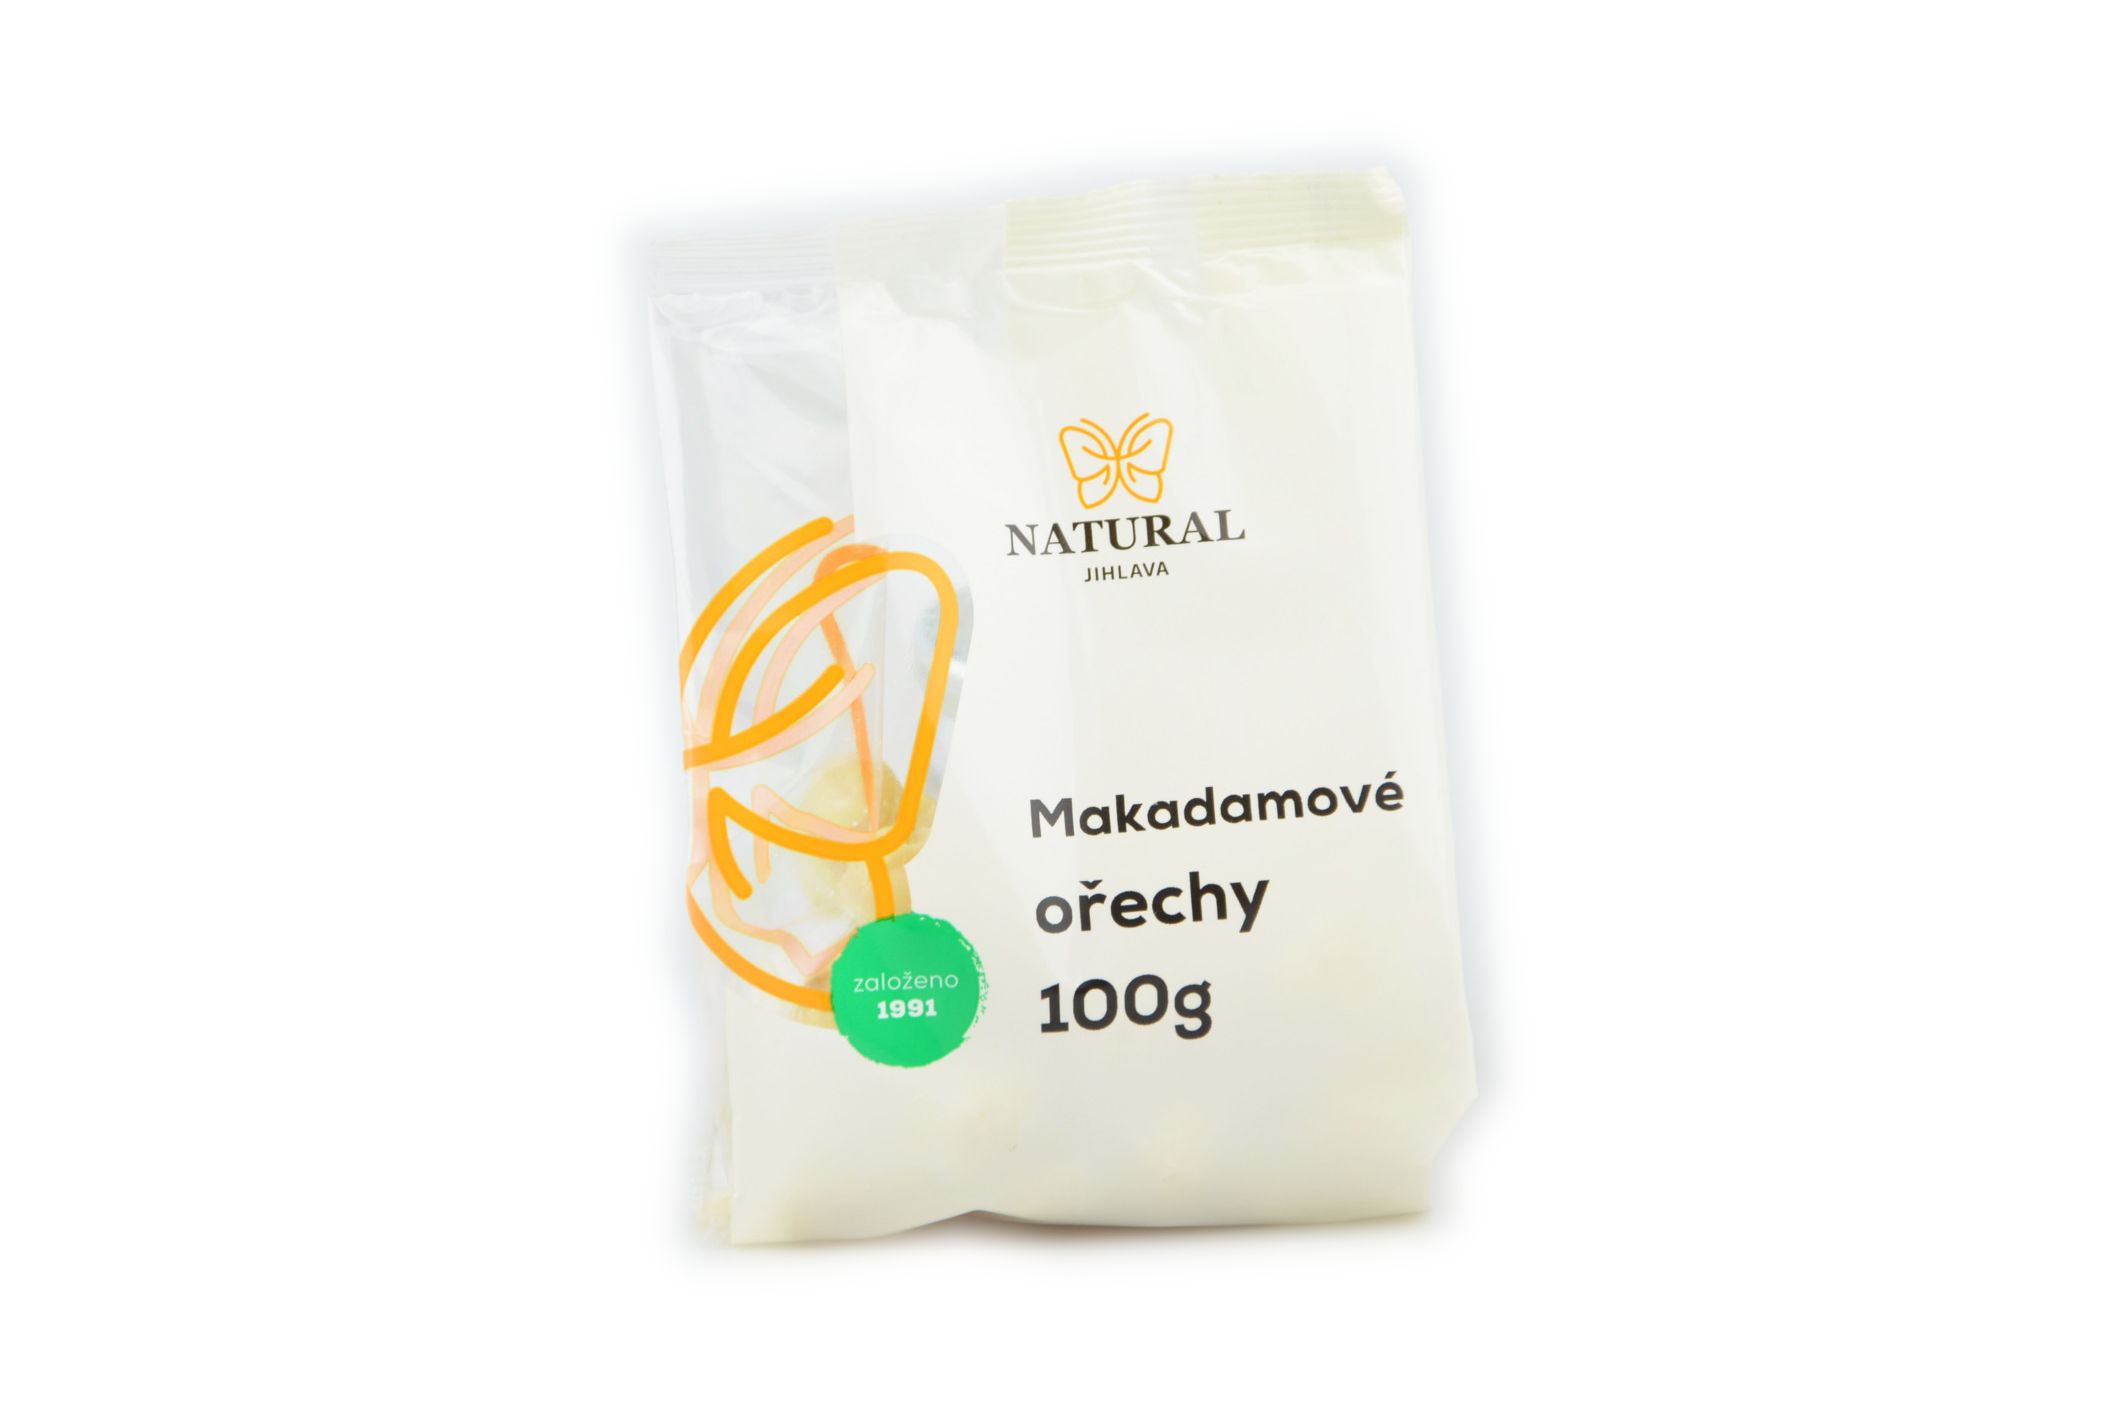 Makadamové orechy - Natural 100g